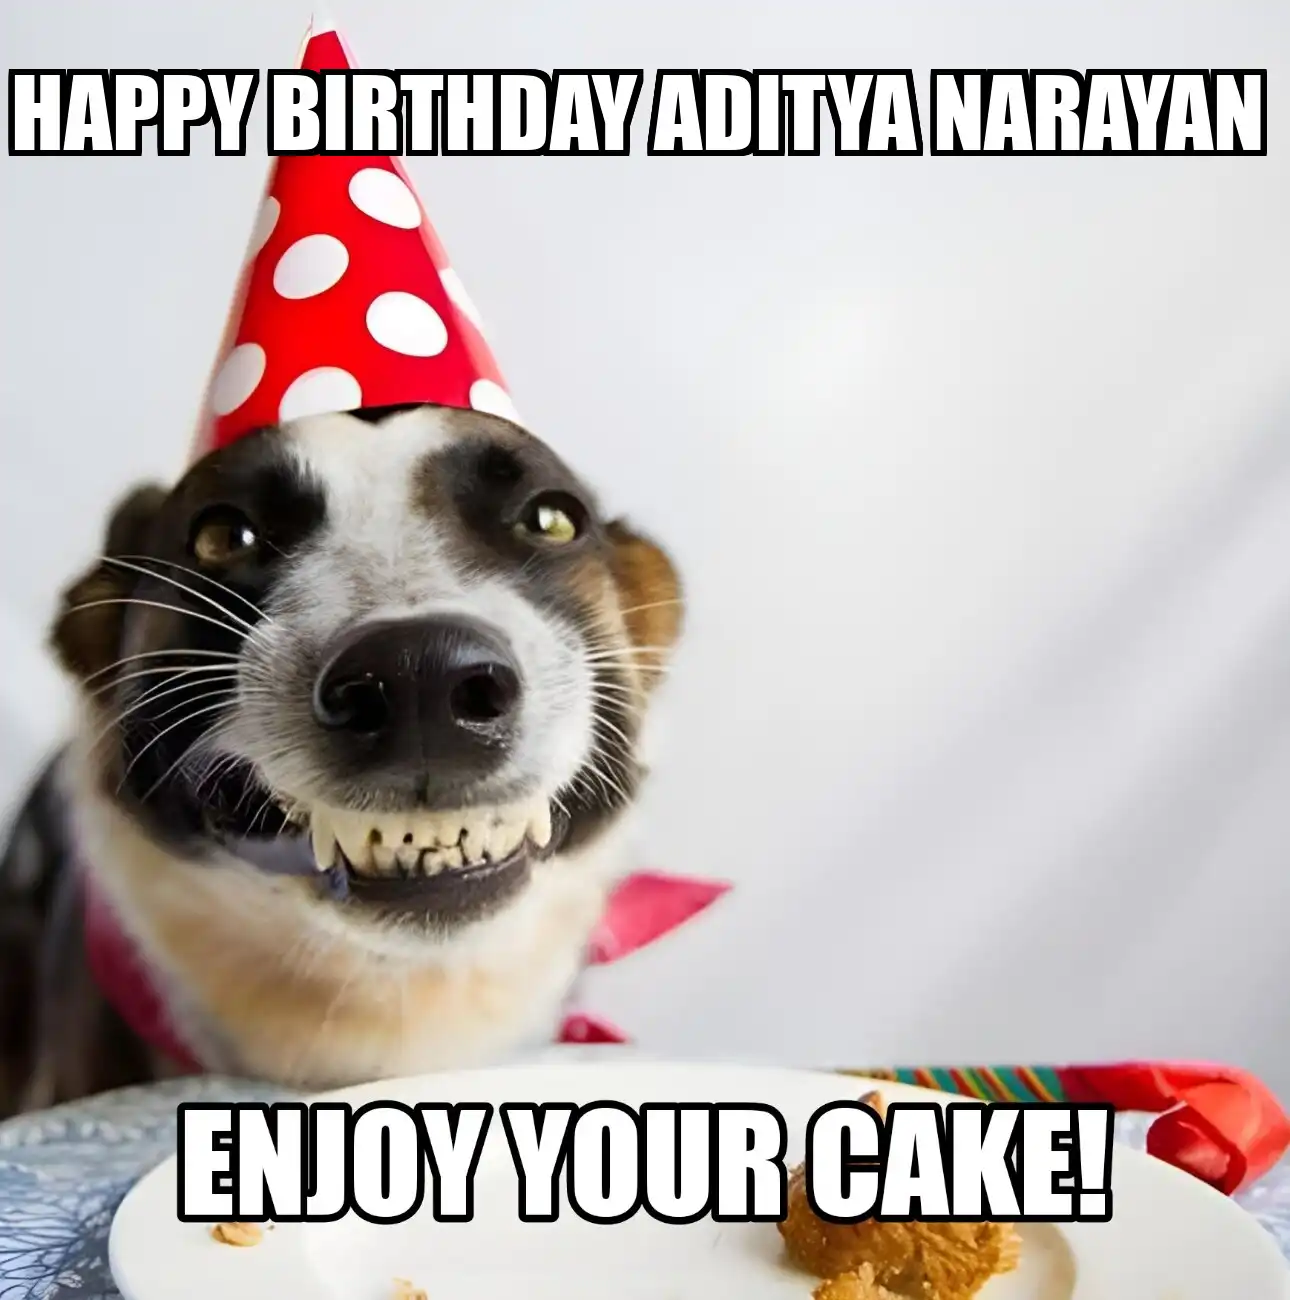 Happy Birthday Aditya narayan Enjoy Your Cake Dog Meme